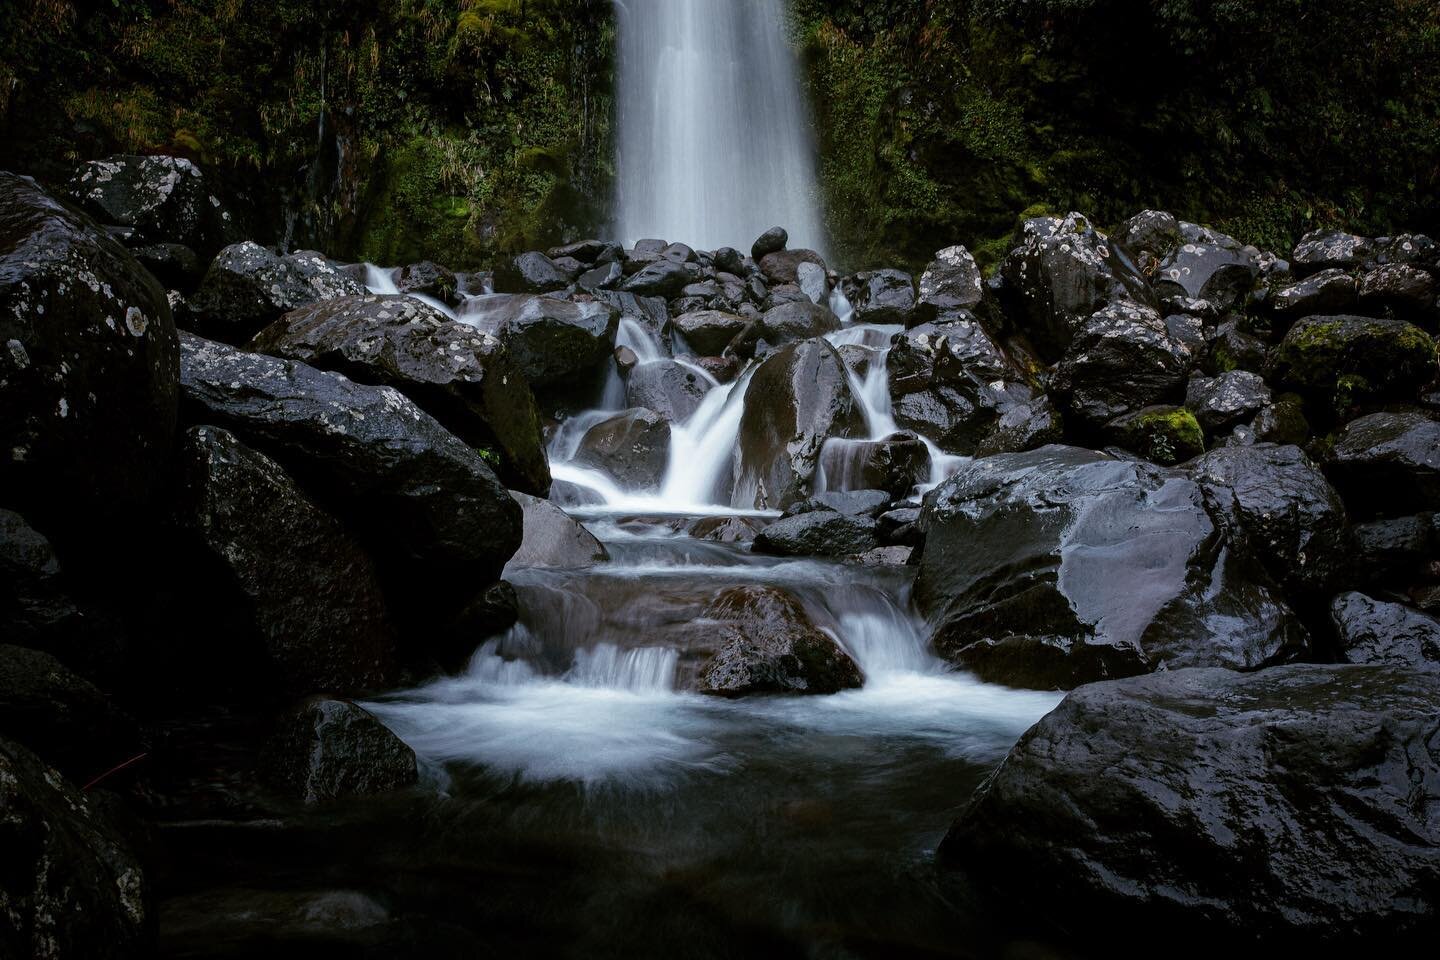 Dawson Falls, Mt Taranaki, September 2020

#waterfall #mounttaranaki #egmontnationalpark #waterfalls #newzealand #purenz #nz #nzwaterfalls